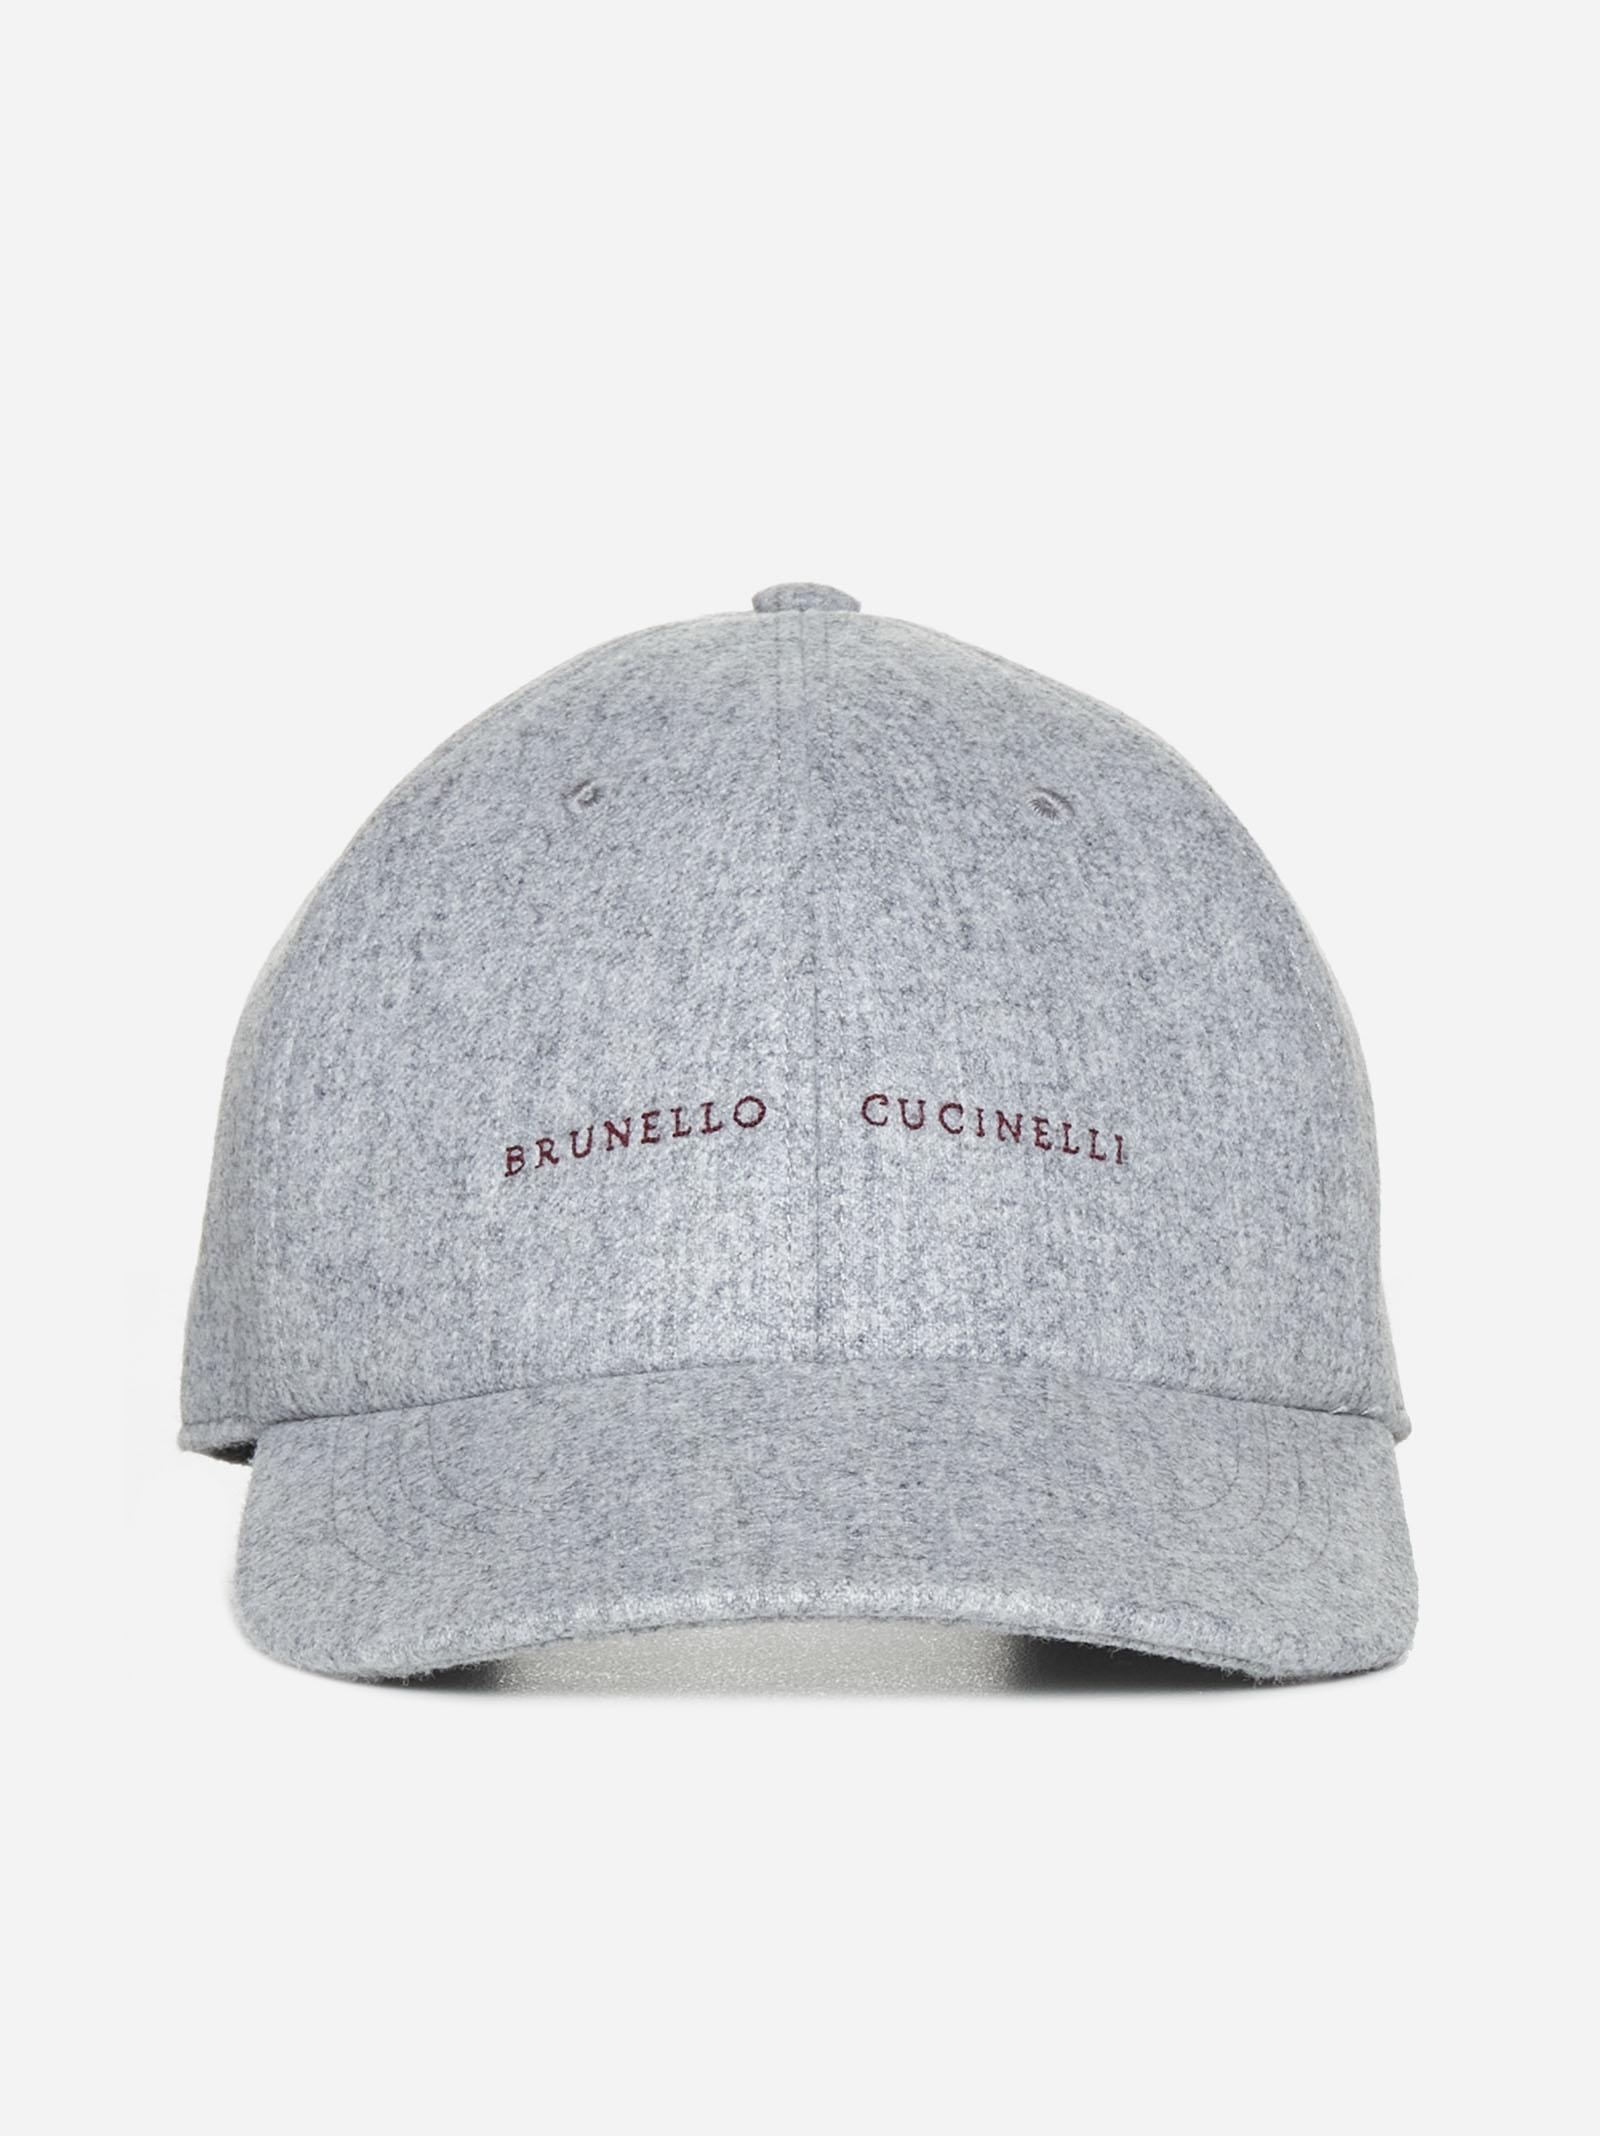 Brunello Cucinelli Wool Baseball Hat in Gray for Men | Lyst